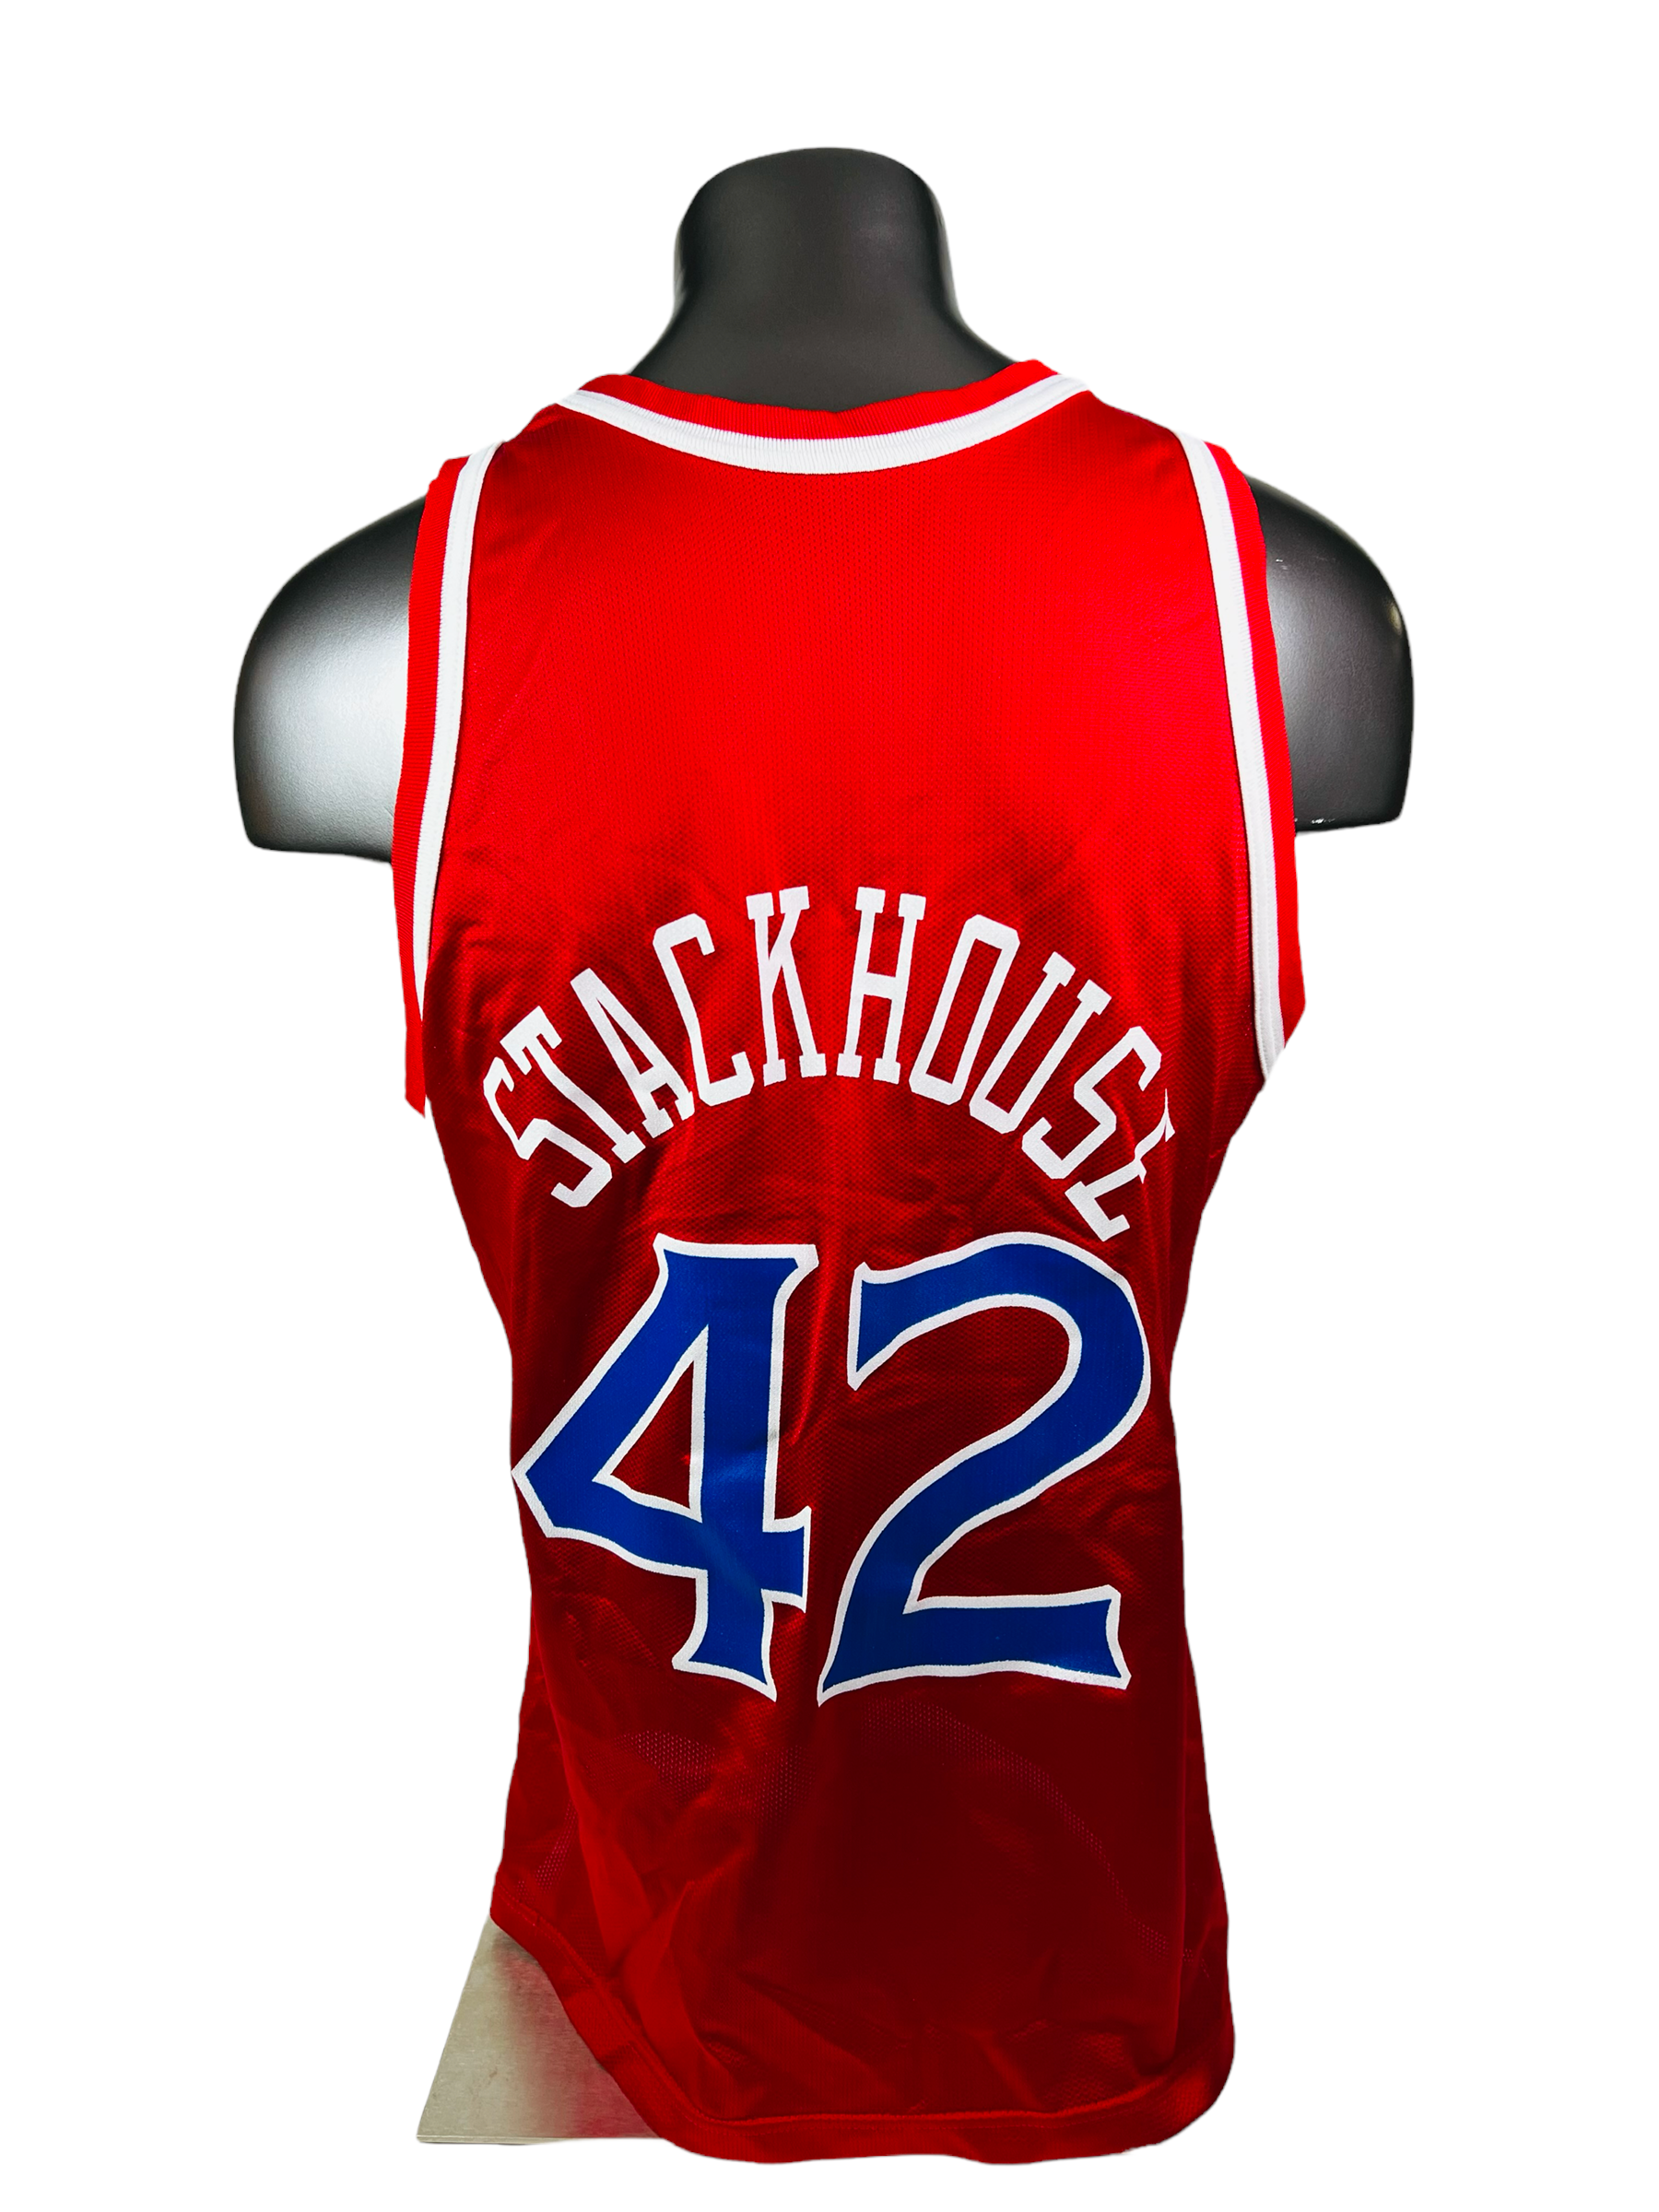 Size 48. Vintage 90s Champion Jerry Stackhouse 42 Phila 76ers